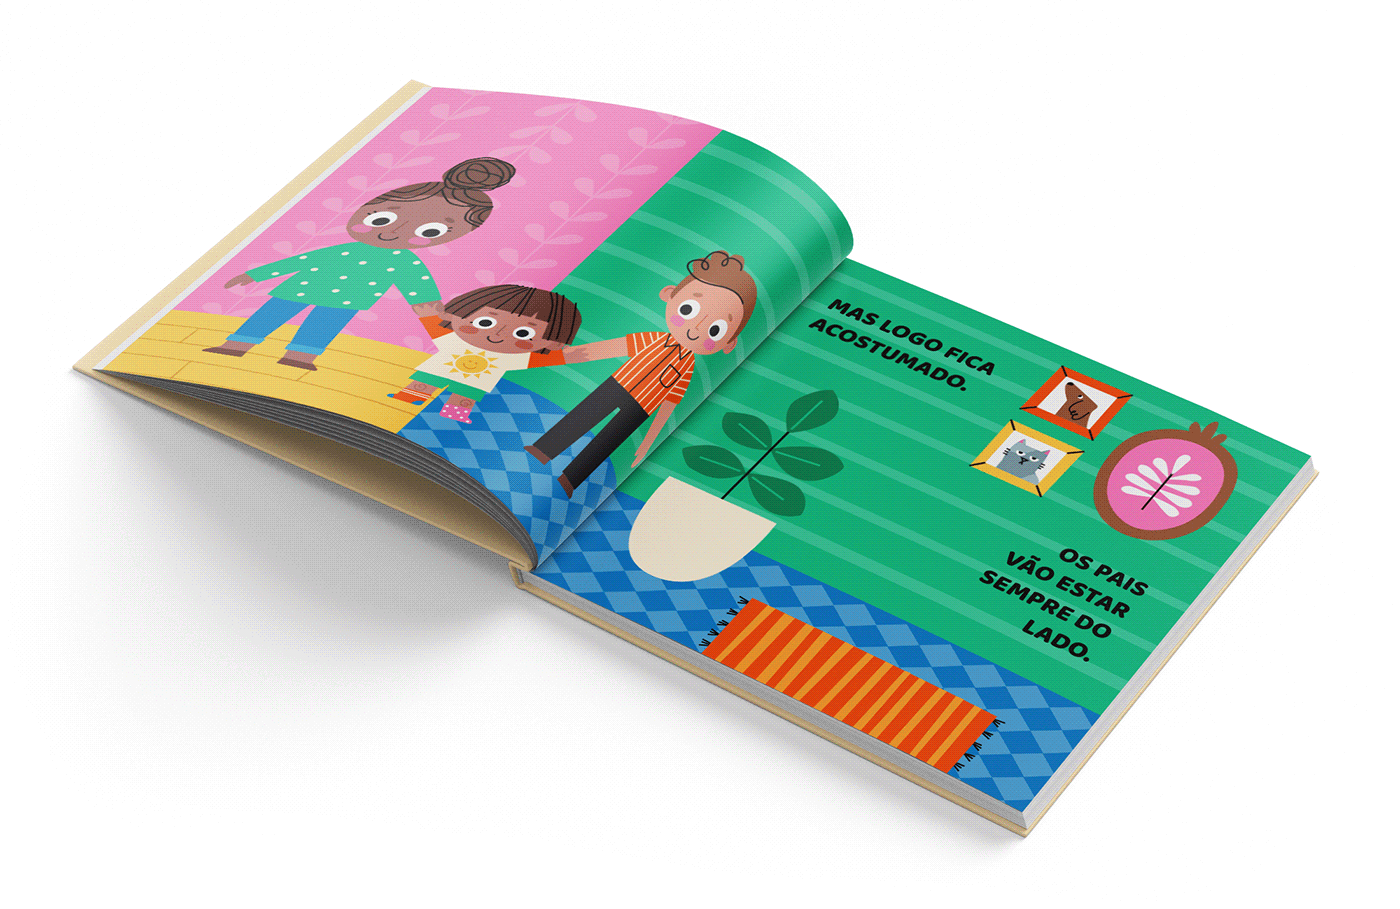 Livro book infantil ILLUSTRATION  Character design  educativo criança kids children illustration children's book